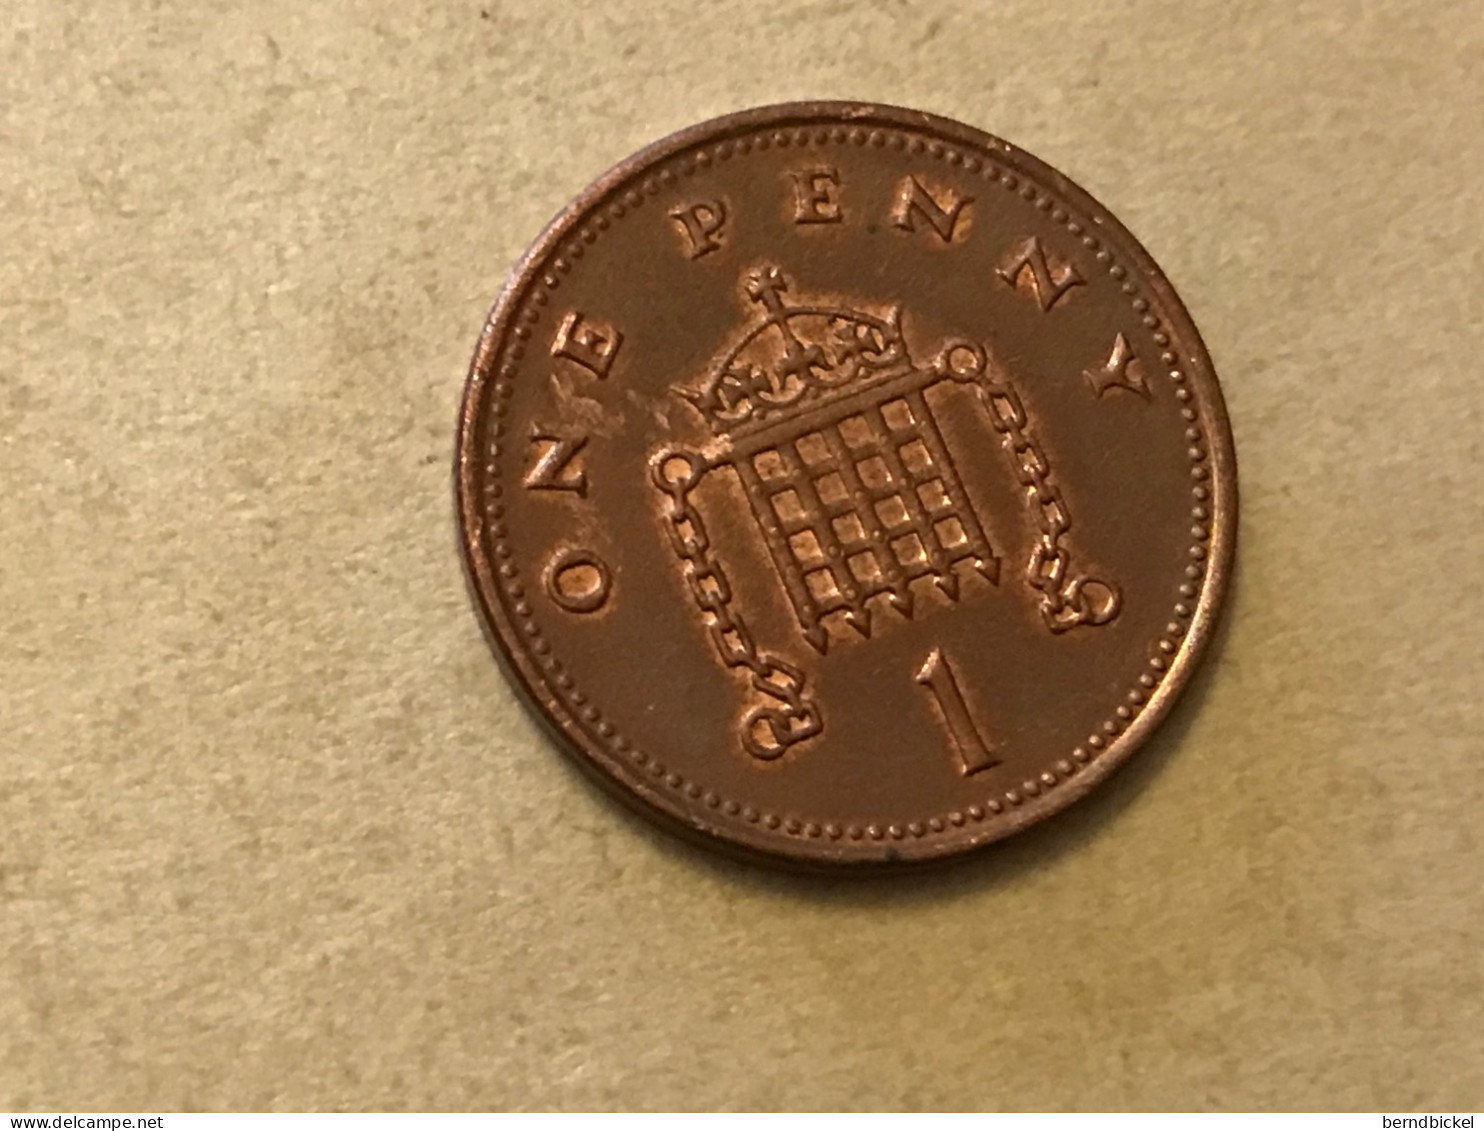 Münze Münzen Umlaufmünze Großbritannien 1 Penny 2002 - 1 Penny & 1 New Penny